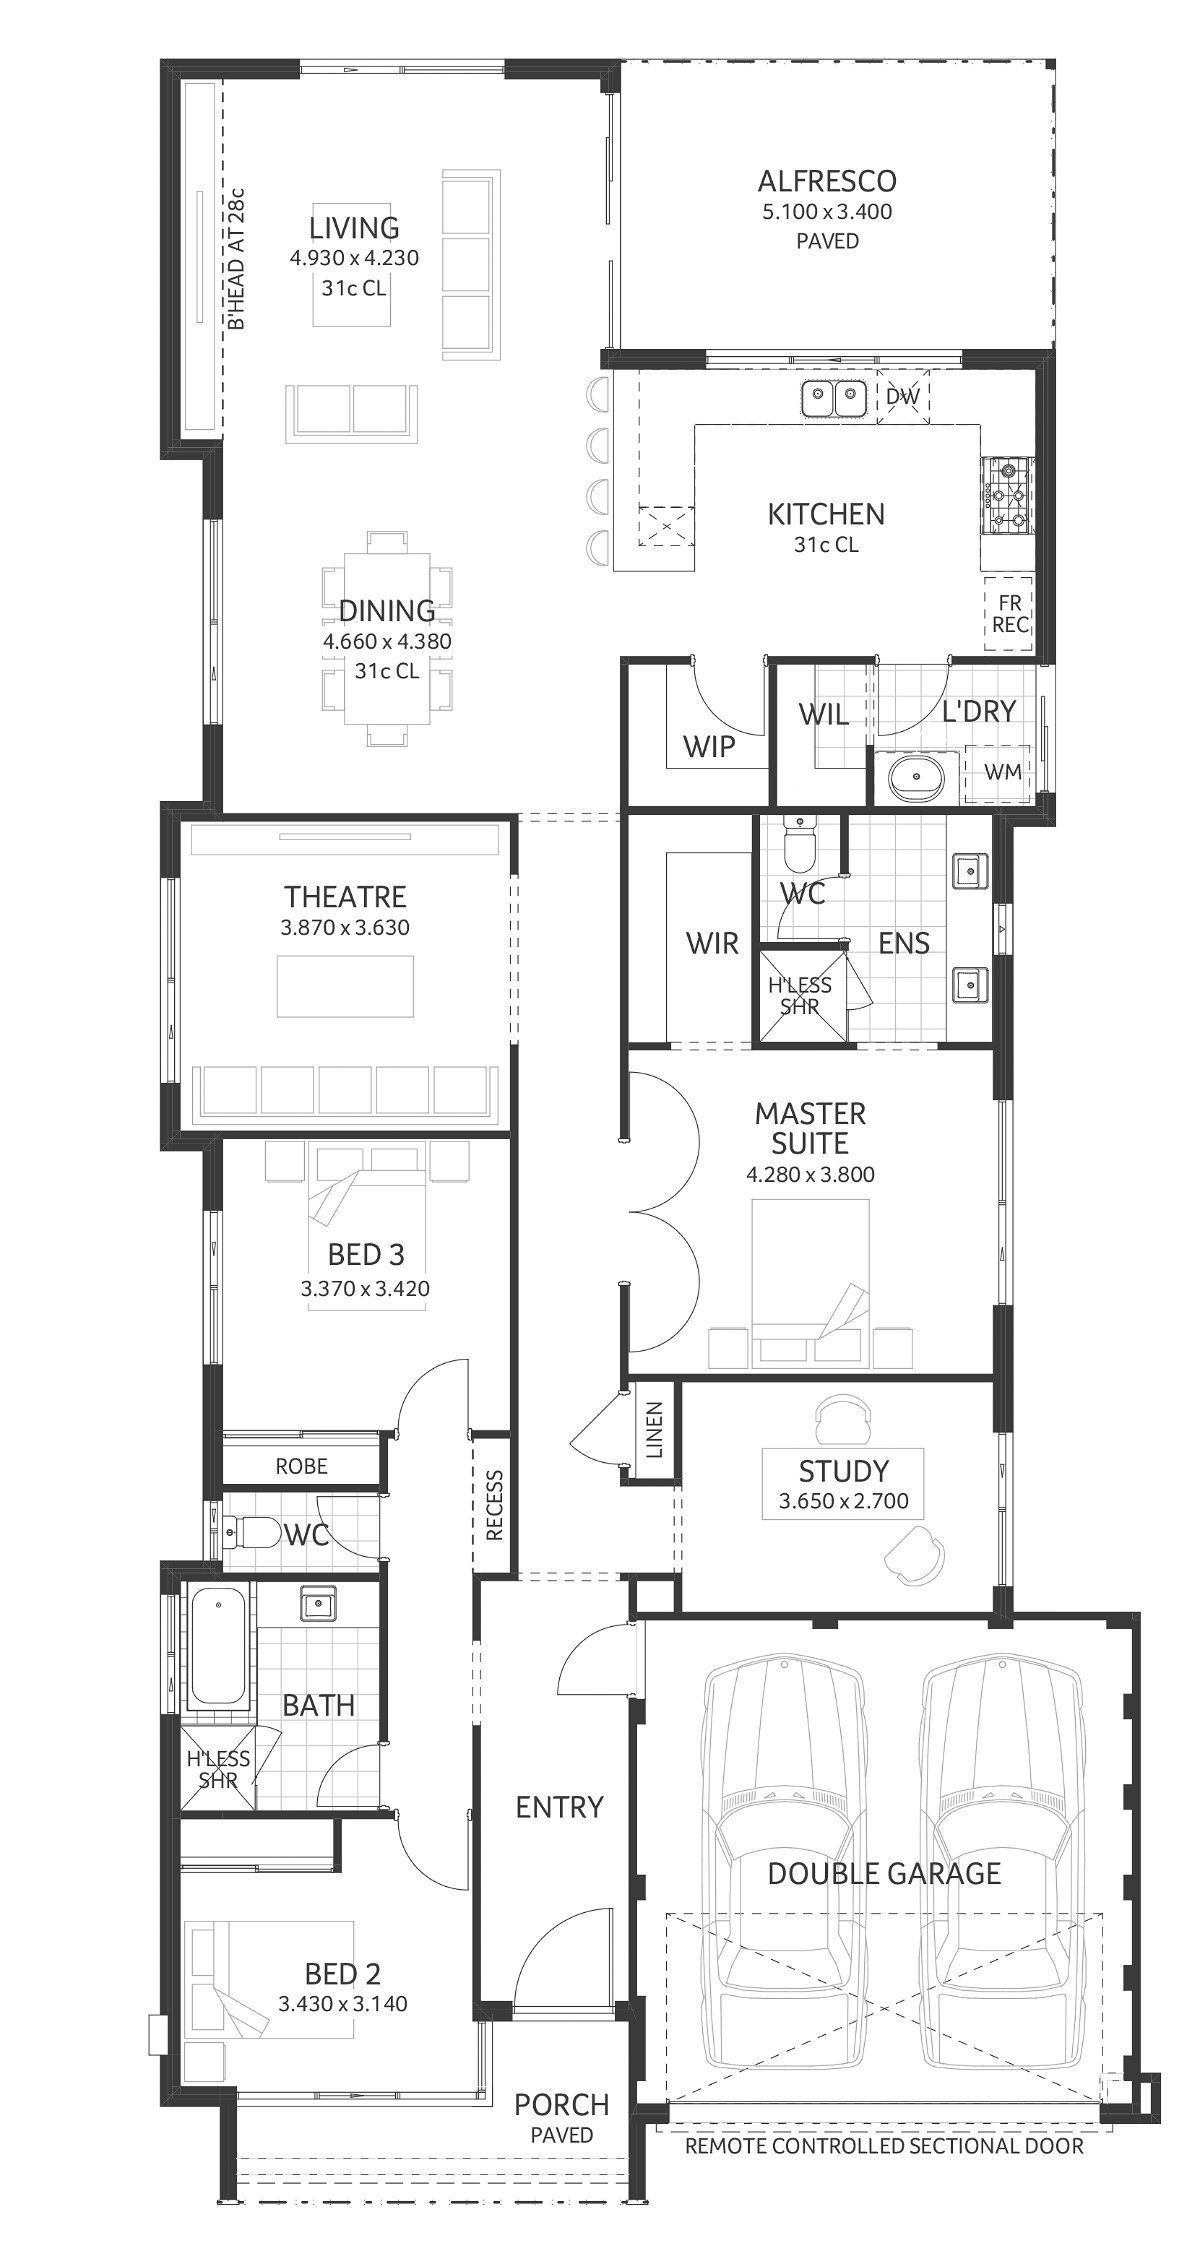 Plunkett Homes - Gracetown | Contemporary - Floorplan - Gracetown Luxe Contemporary Marketing Plan Croppedjpg